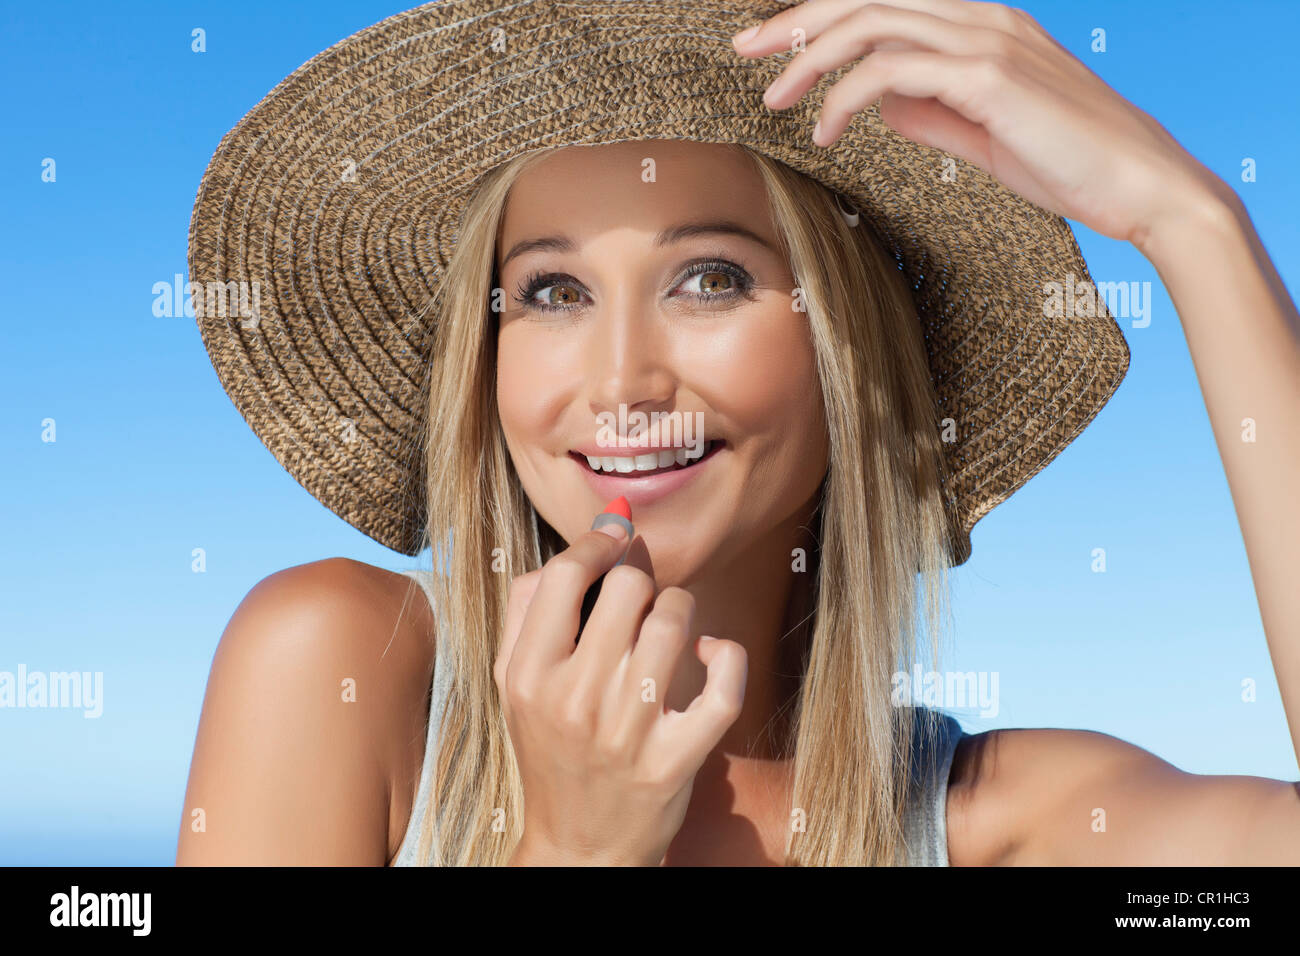 Smiling woman applying lipstick outdoors Stock Photo